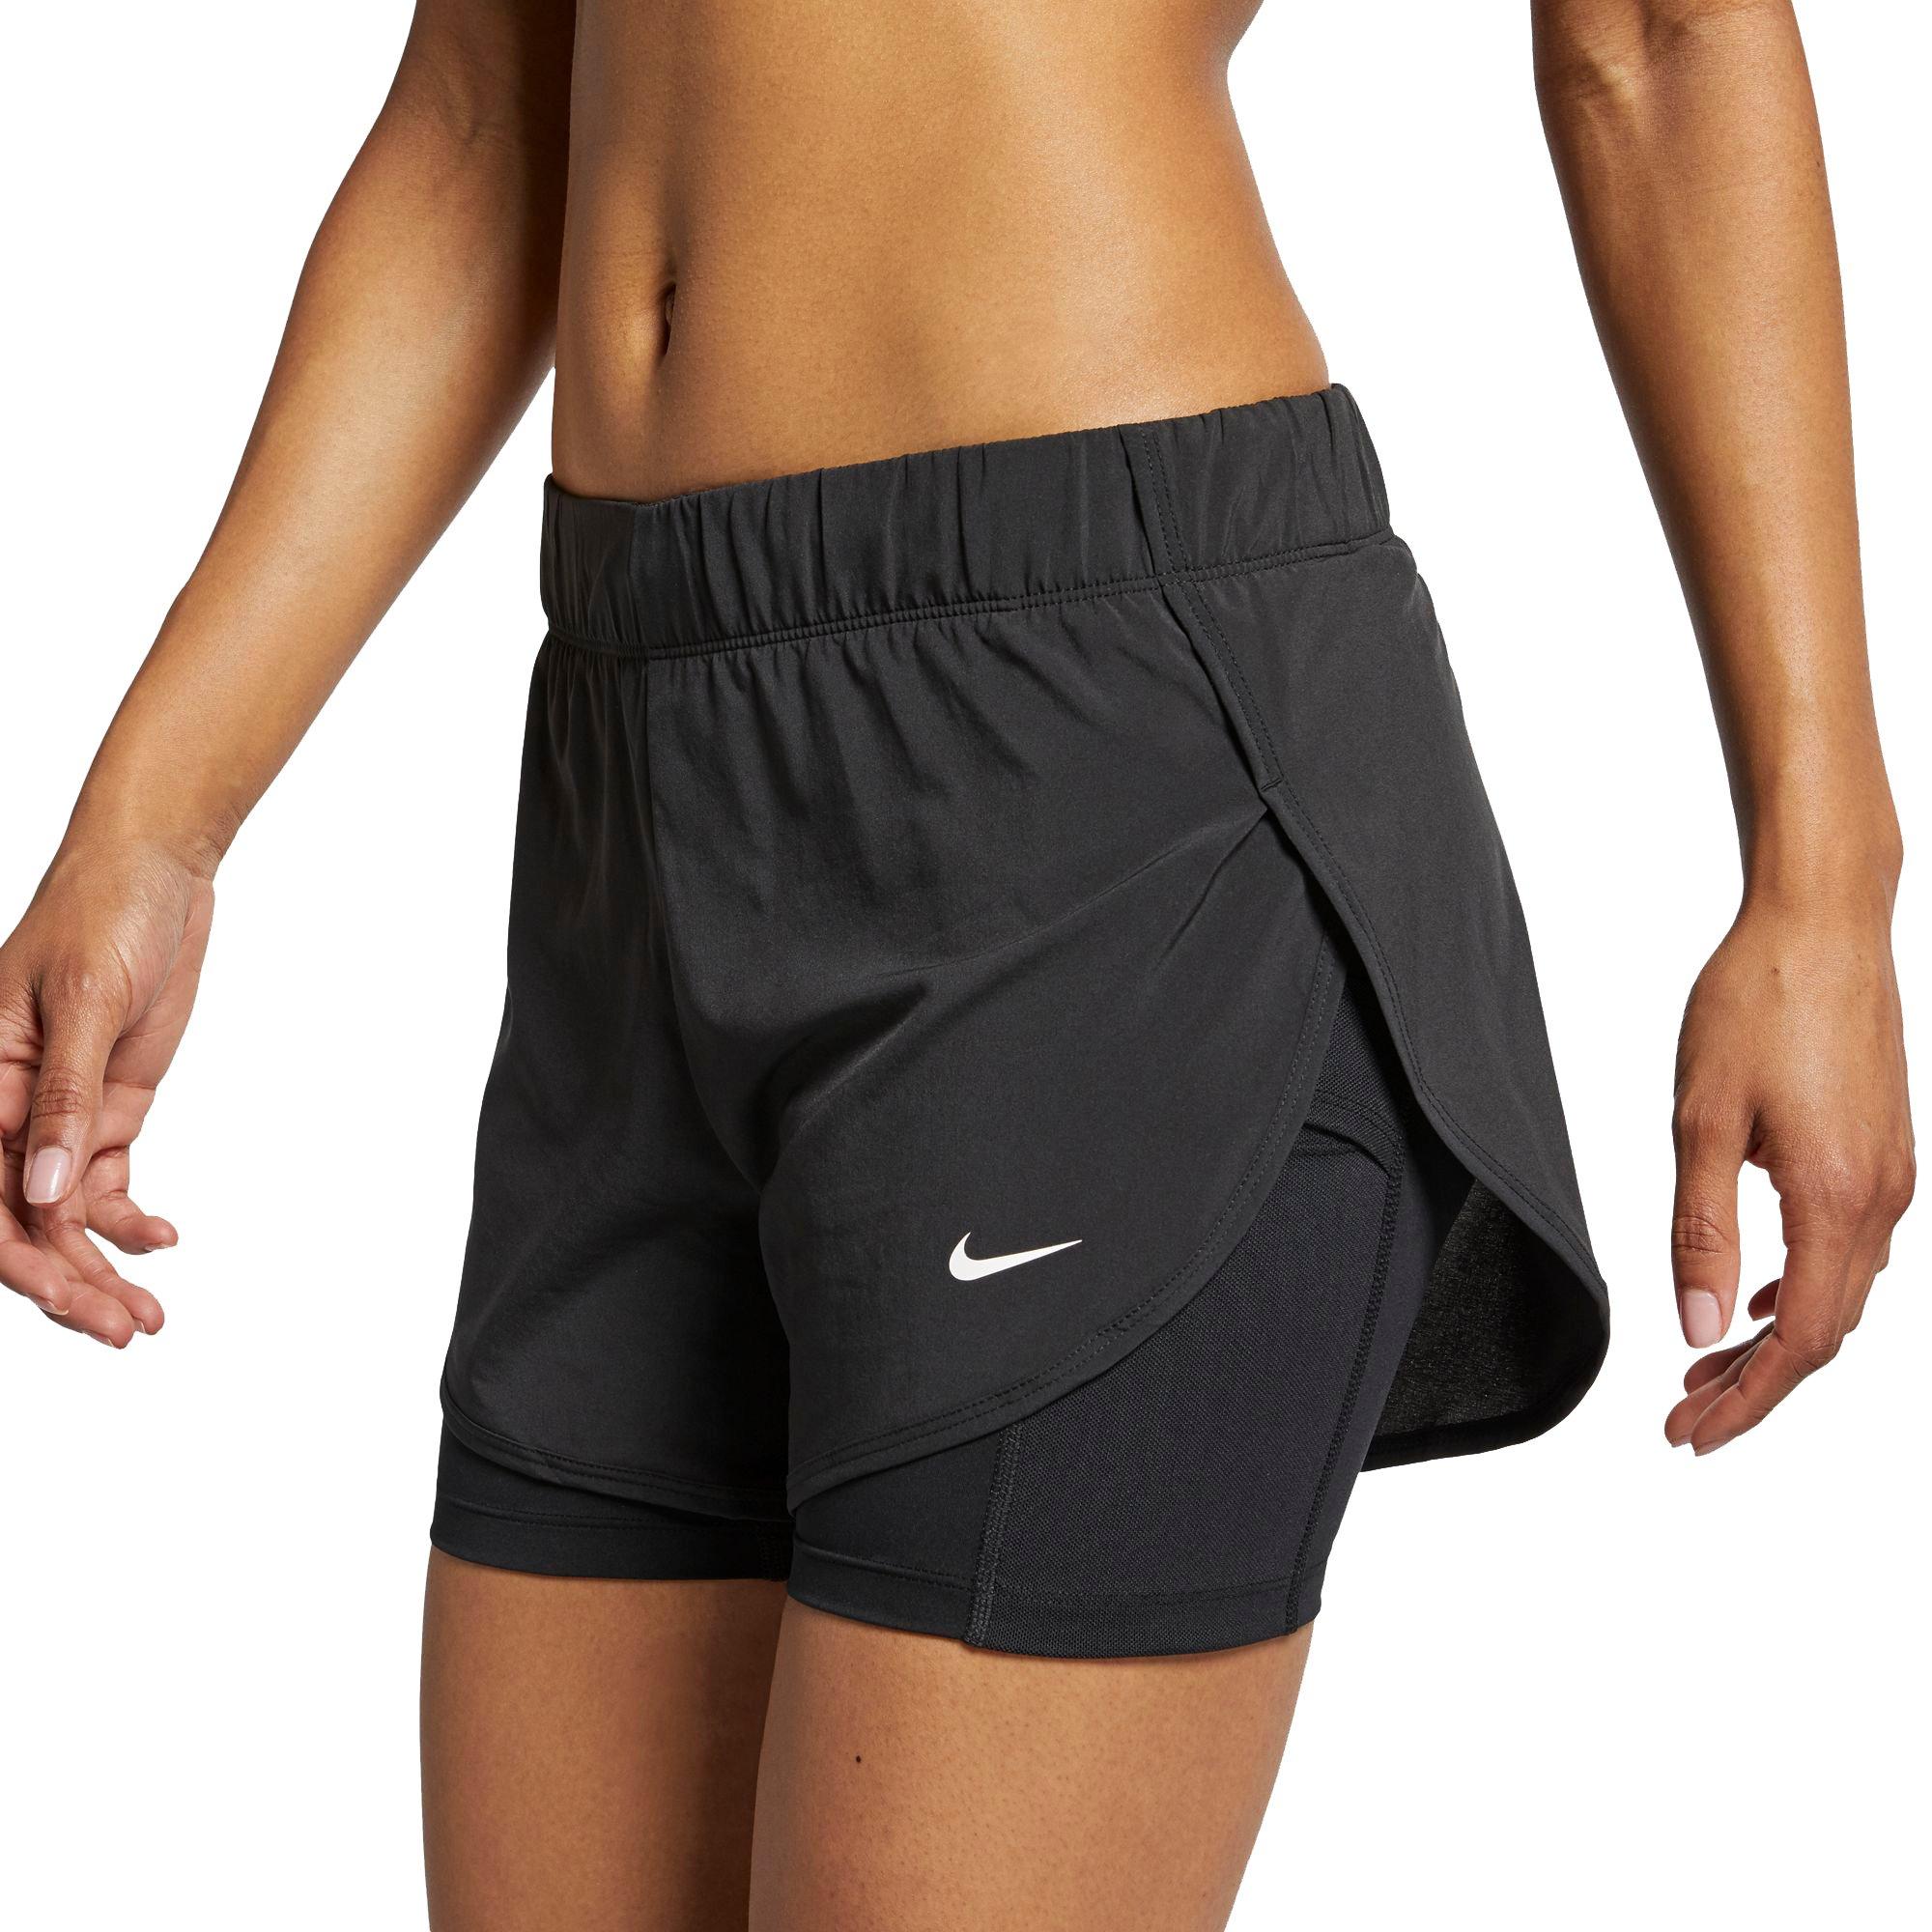 hibbett sports mens shorts